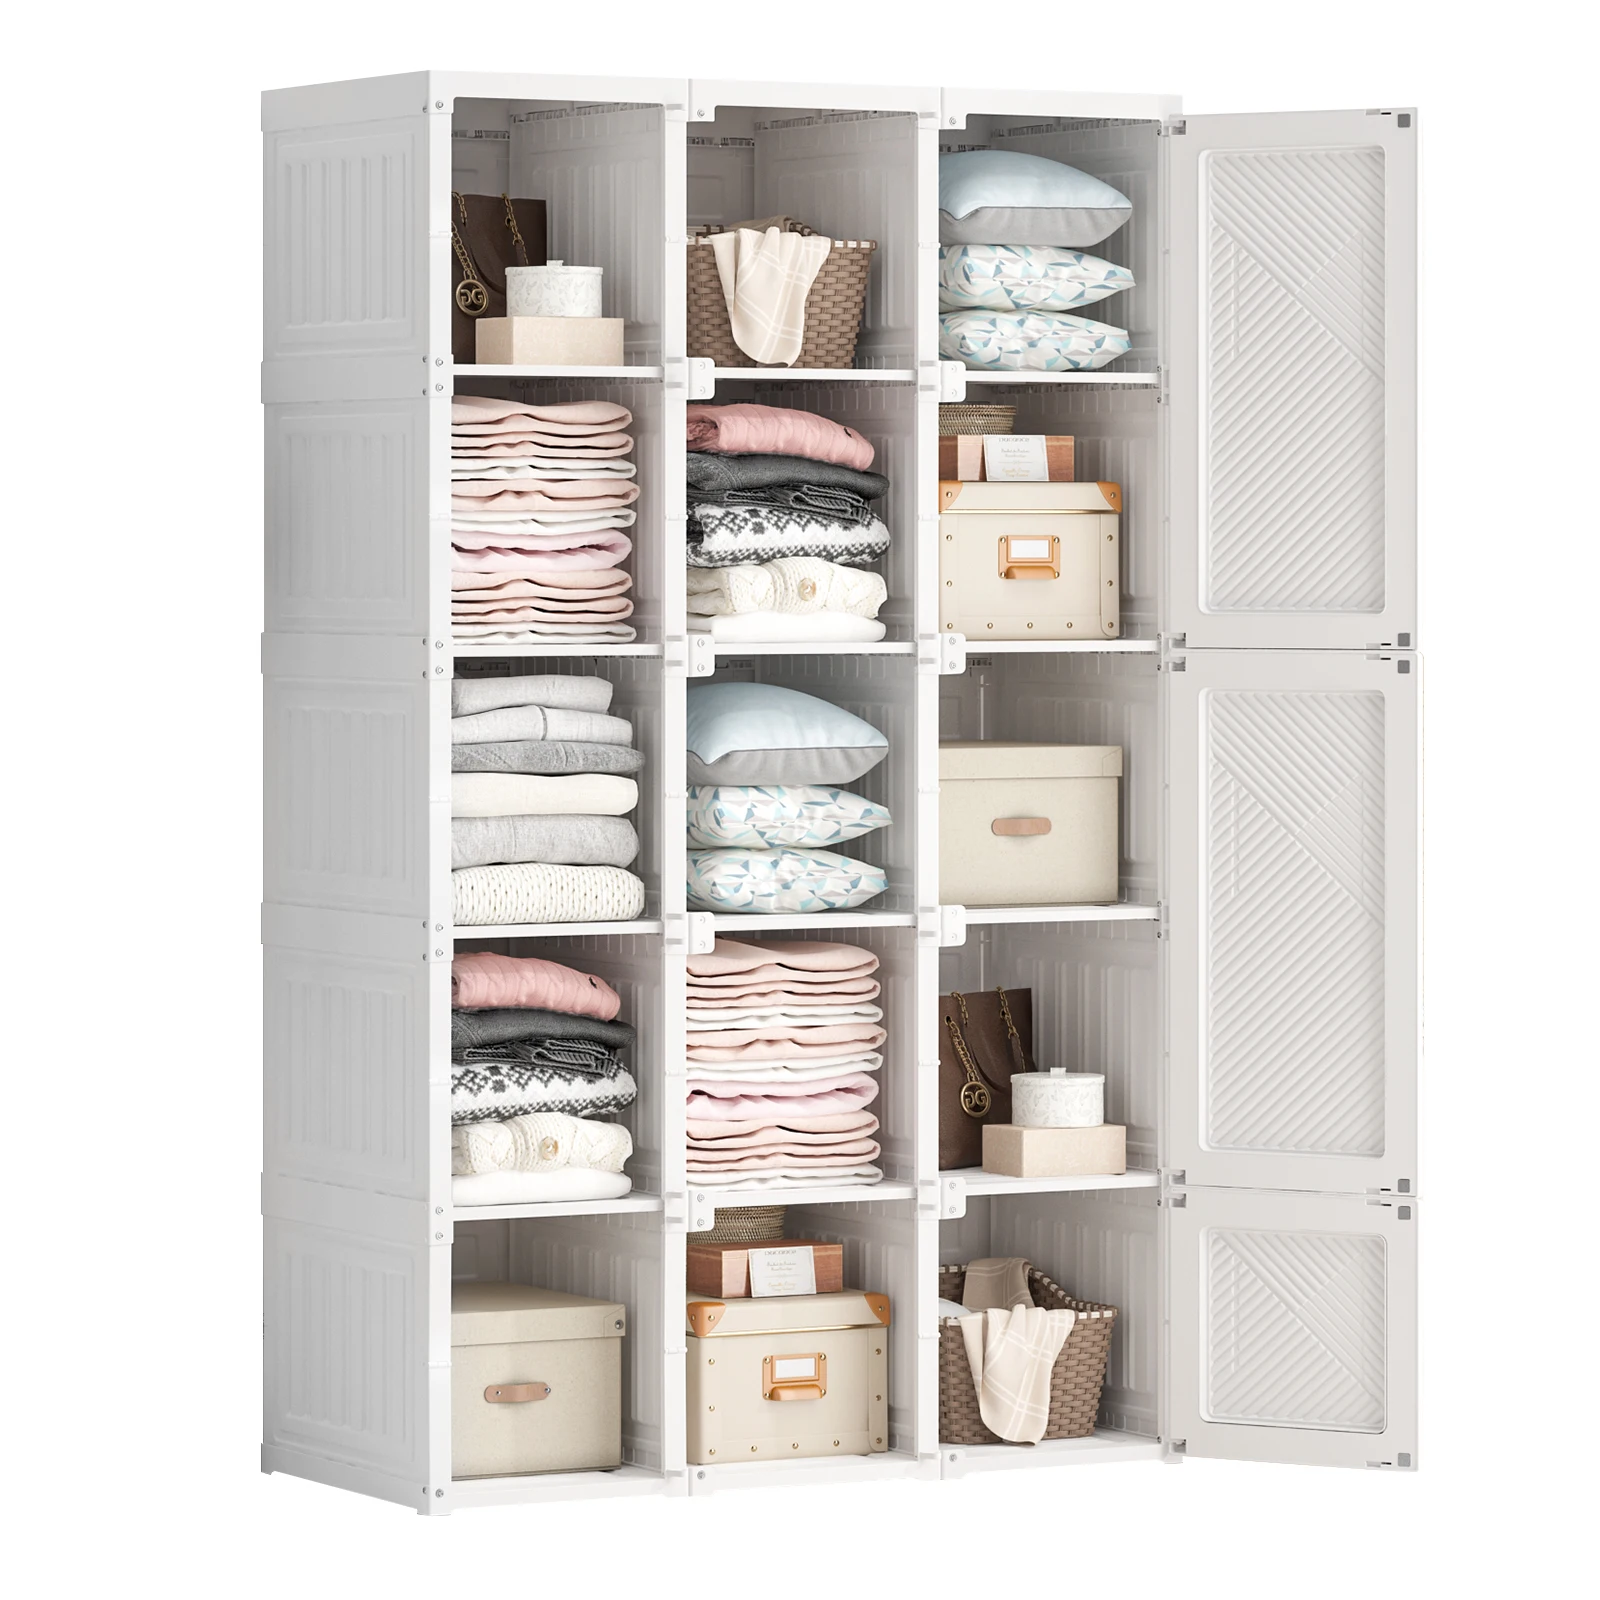 

2021 Amazon Wardrobe Folding Closet Fabric bedroom Furniture Clothes Storage Organizer Cabinet Locker Combination Clothing, White